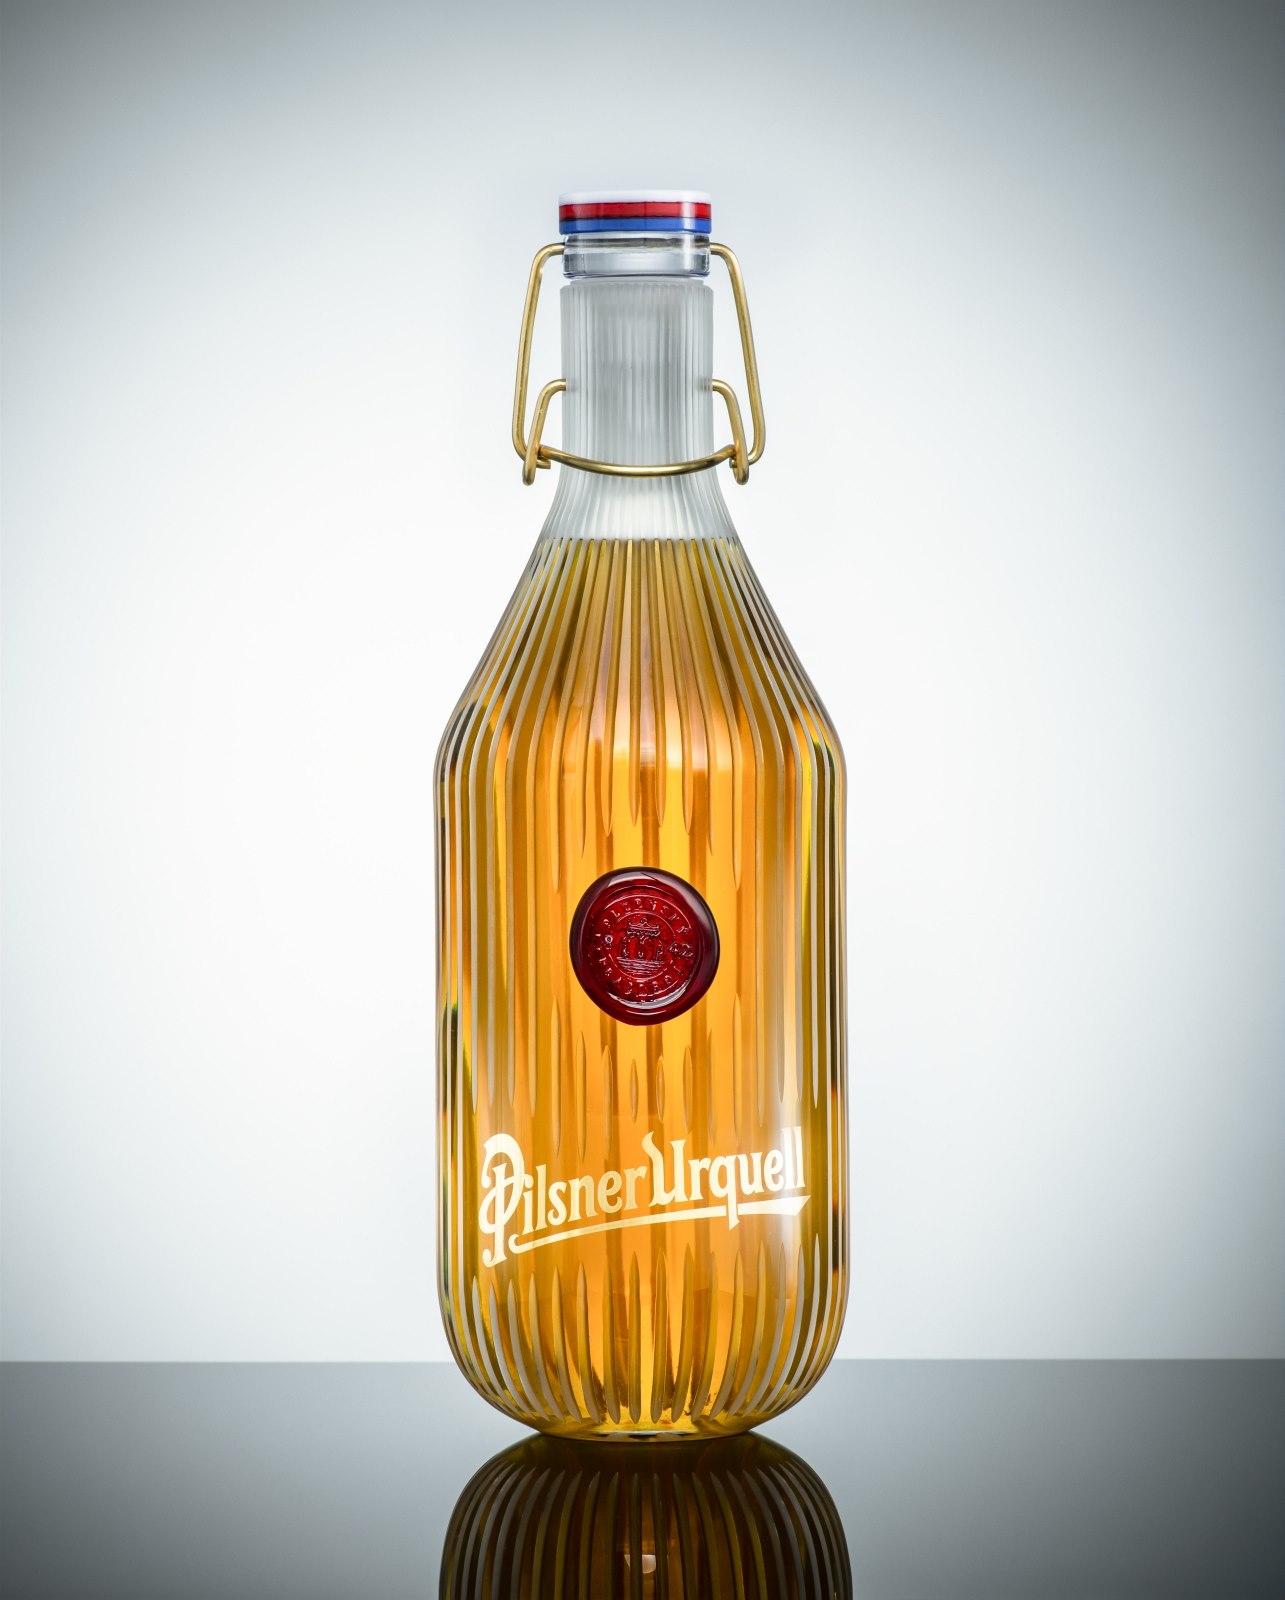 Бочка текилы. Pilsner Urquell бутылка. Pilsner Urquell завод Чехия. Уникальные бутылки. Кристалл напиток.